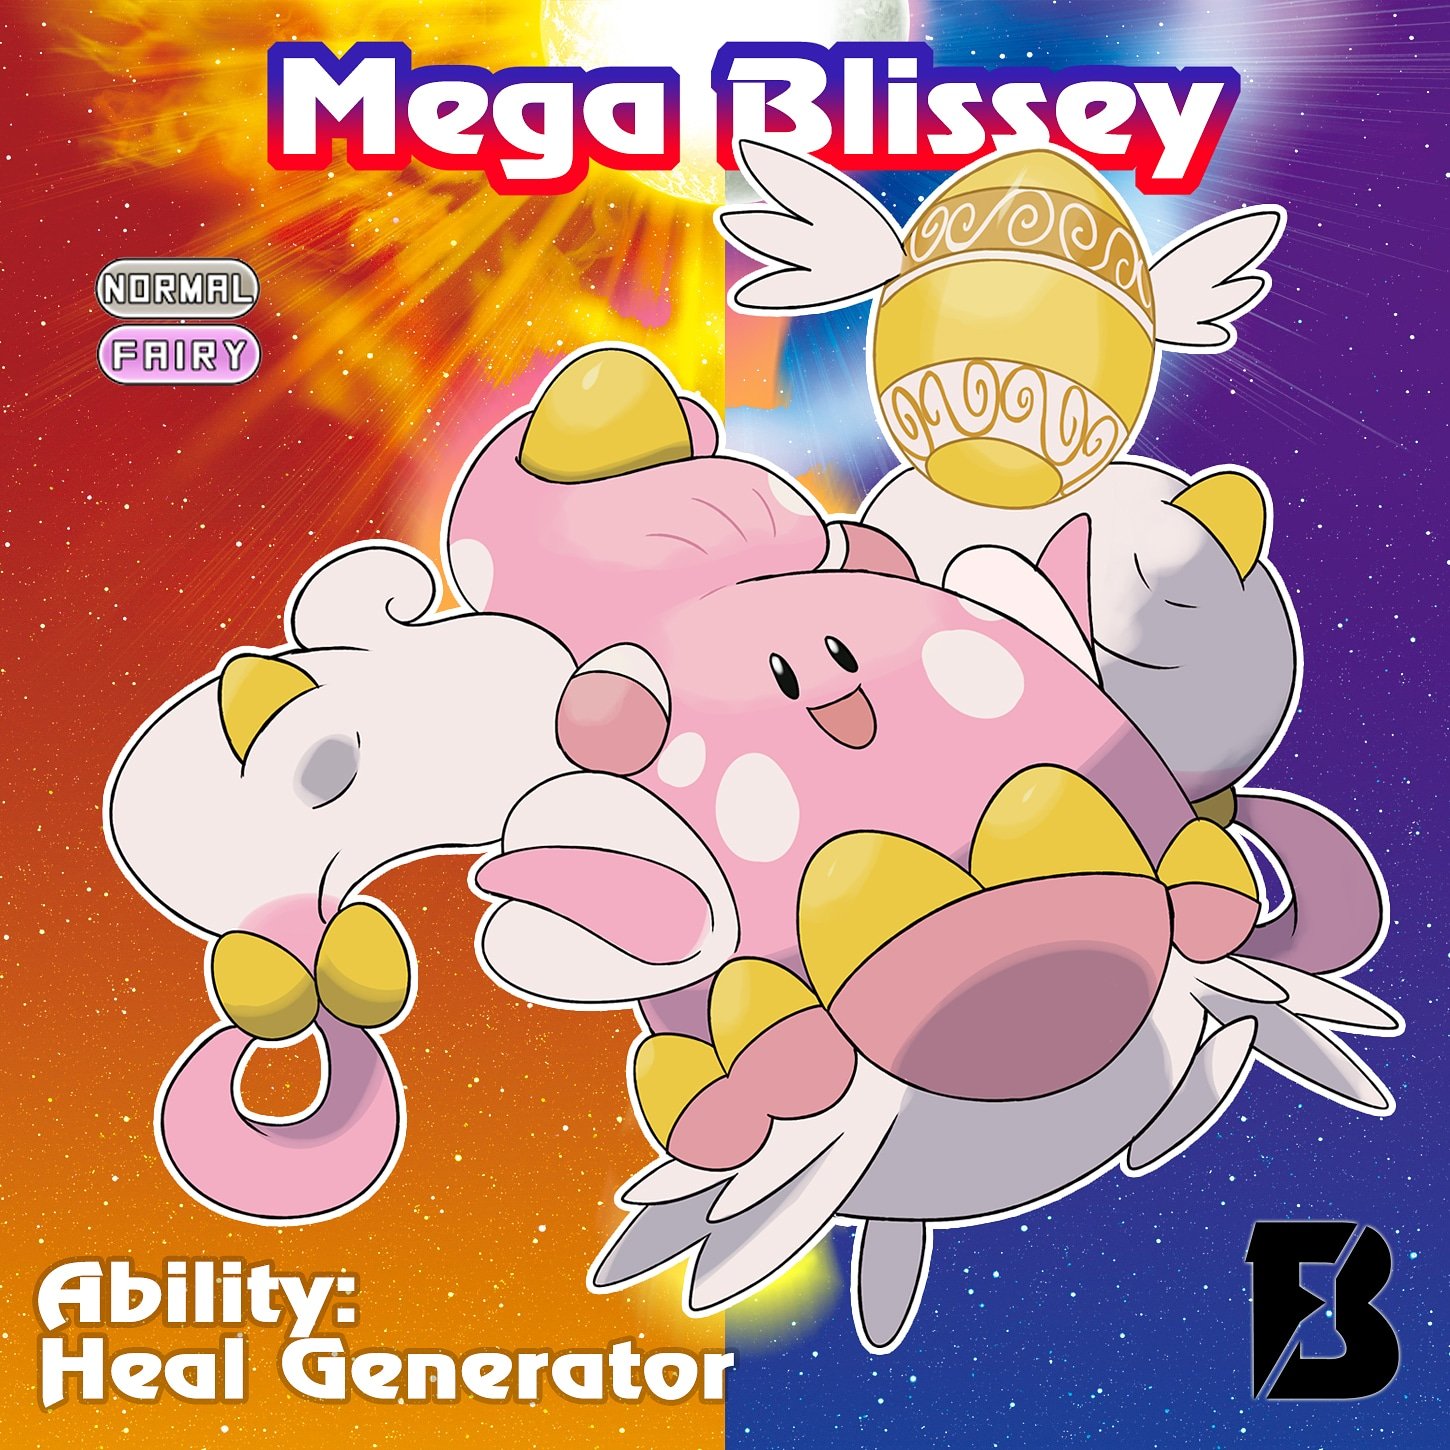 Blissey's Mega Punch by Pokemonsketchartist on DeviantArt